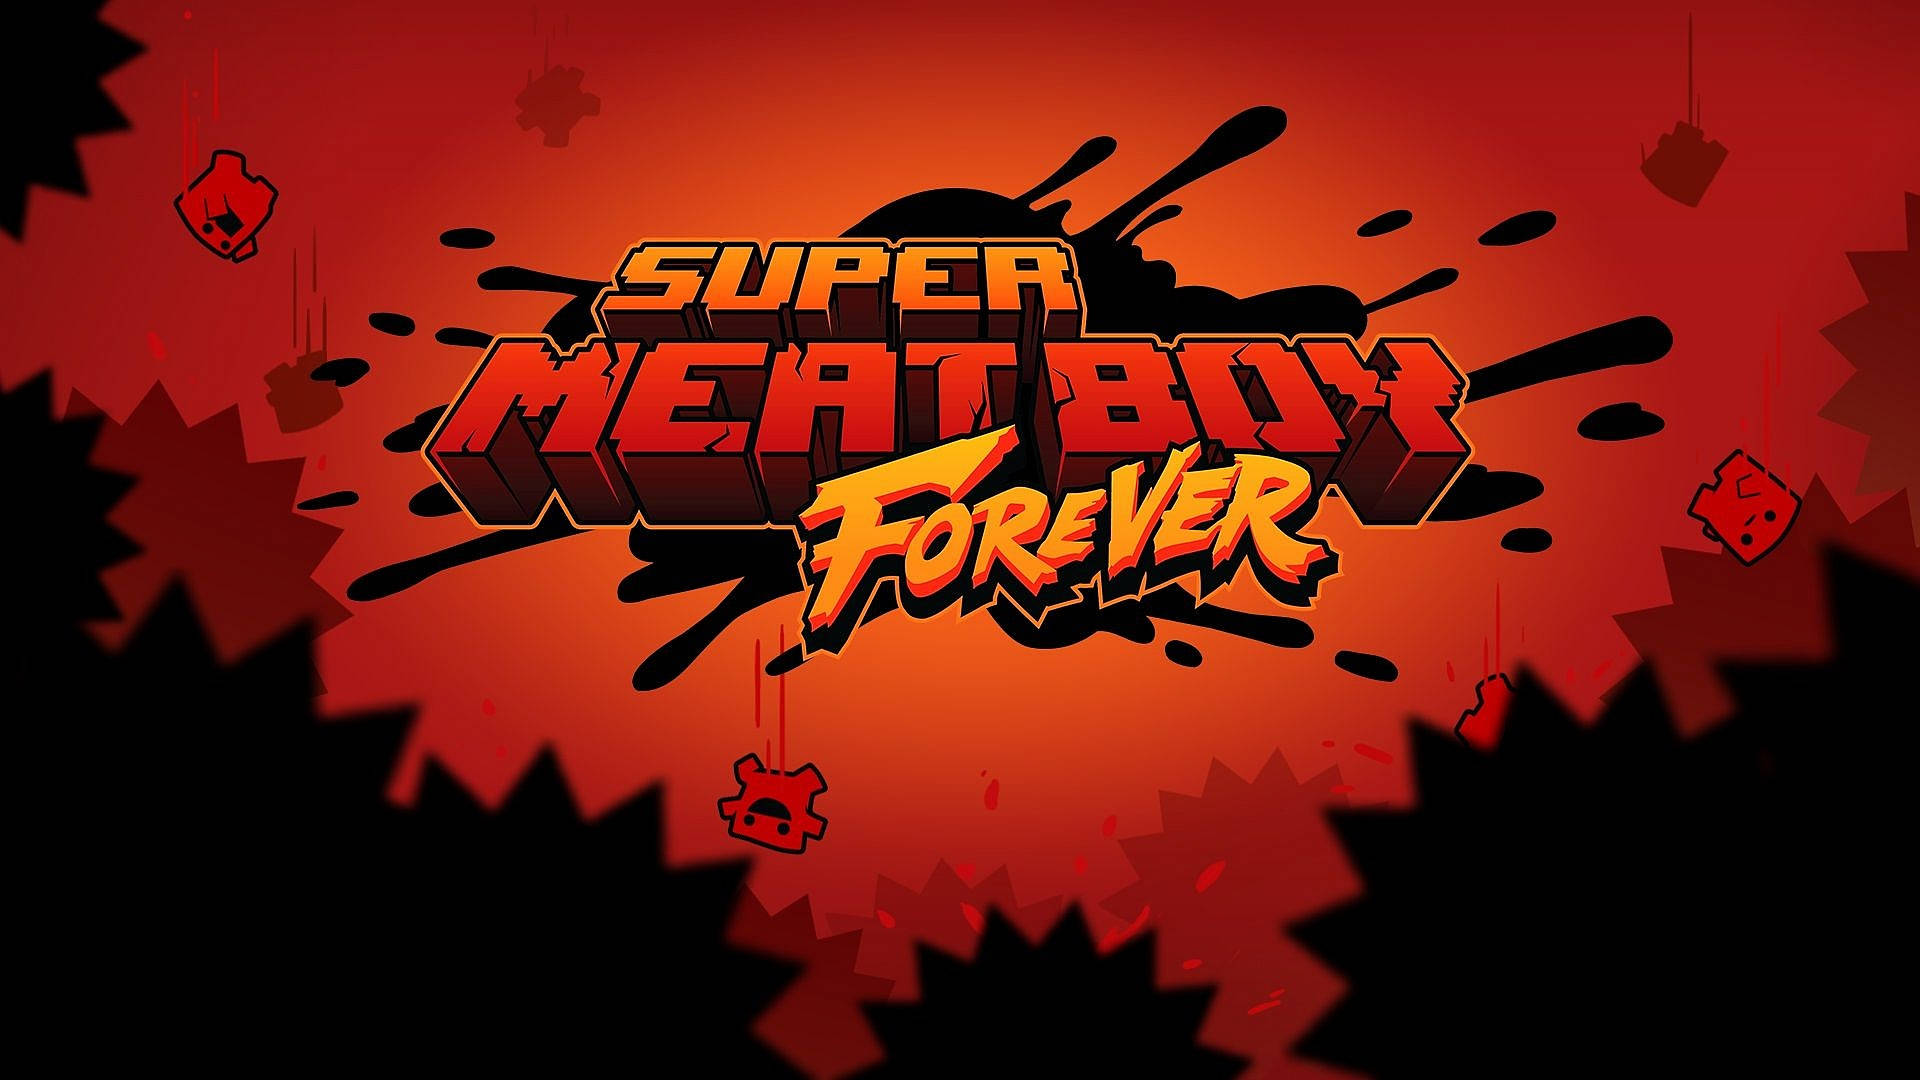 High-octane Action in Super Meat Boy Forever Wallpaper